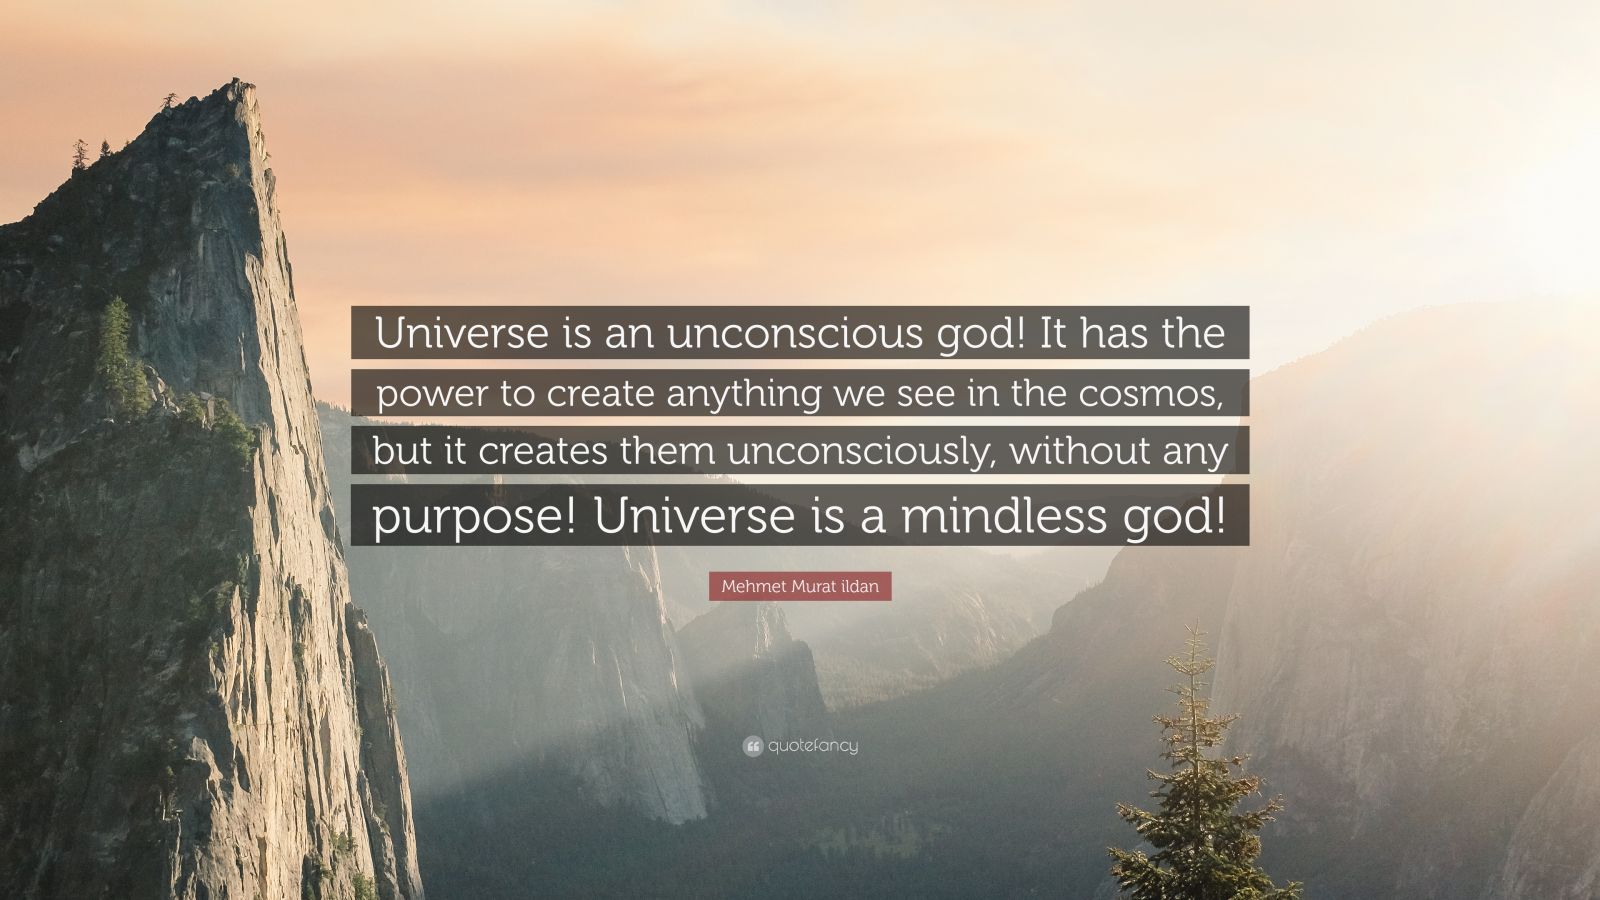 Mehmet Murat ildan Quote: “Universe is an unconscious god! It has the ...